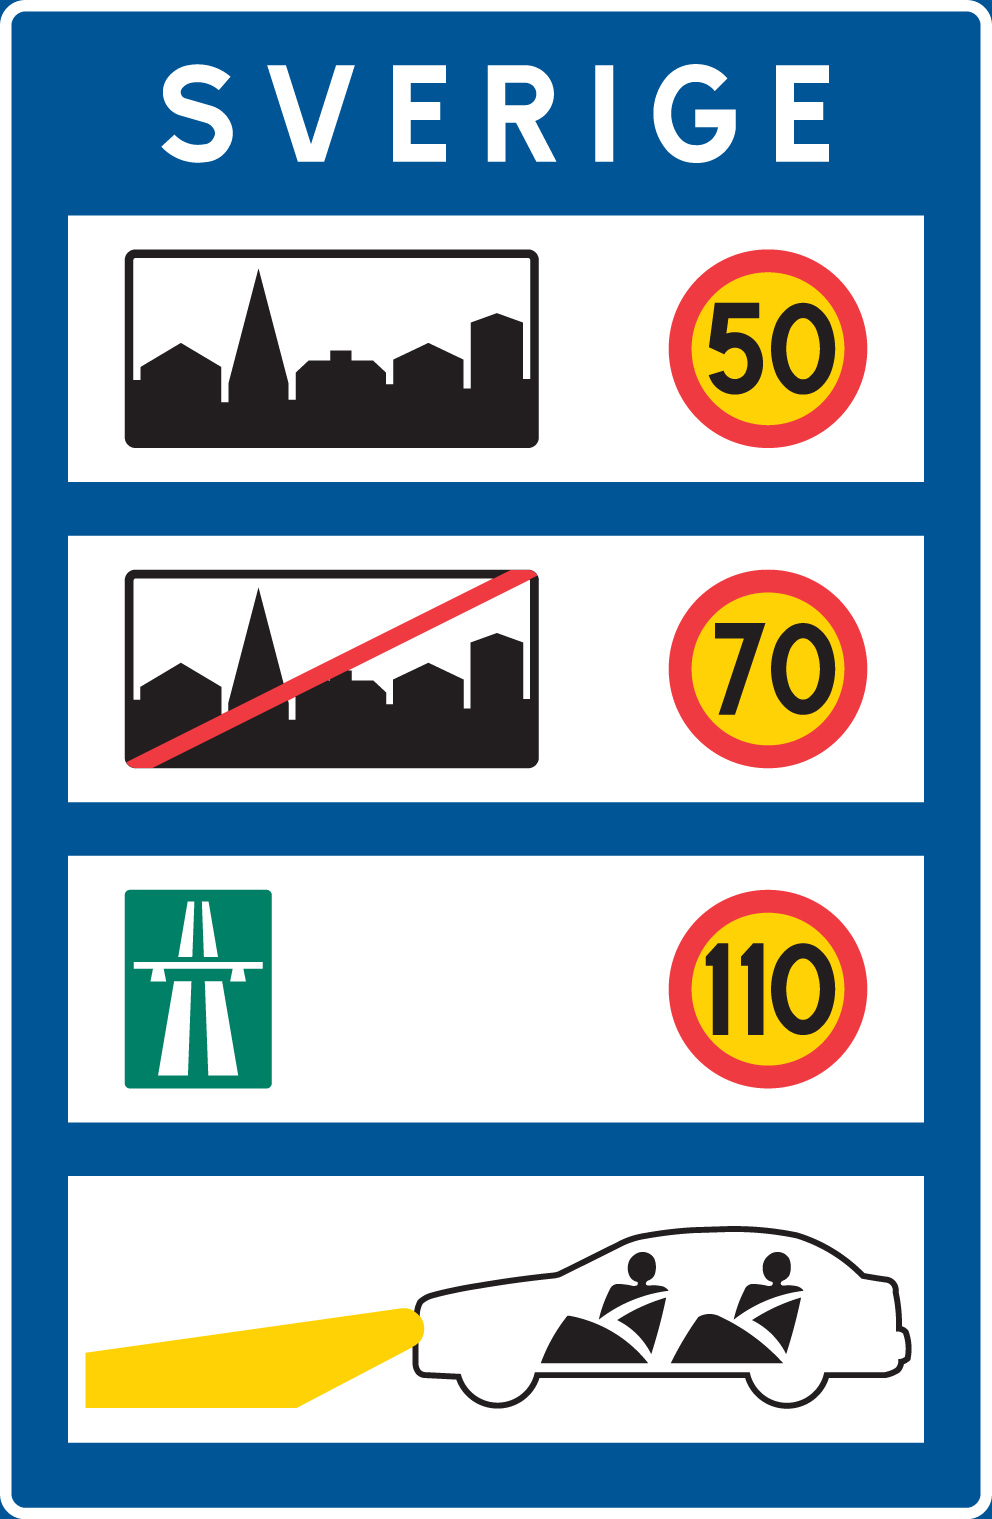 Swedish_road_sign_J1_1.jpg